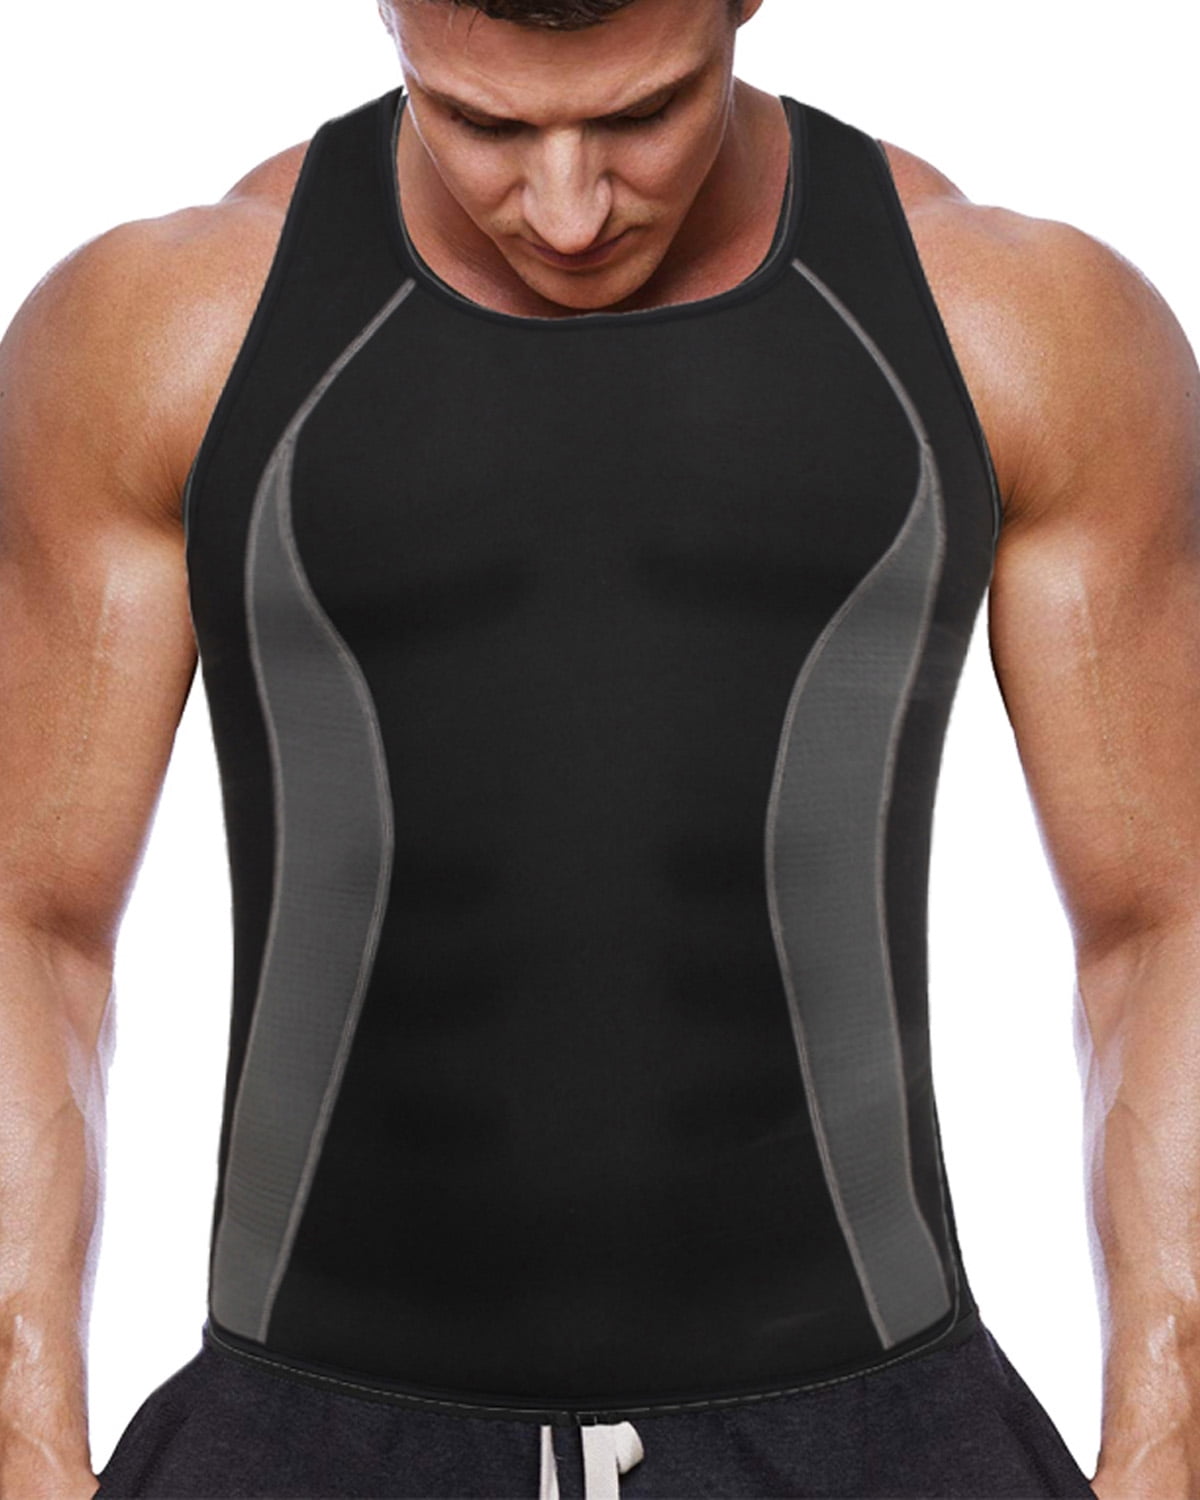 Sauna Suit Tank Top for Men Workout Vest Gym Shirt Shaper Neoprene Help Sweat 